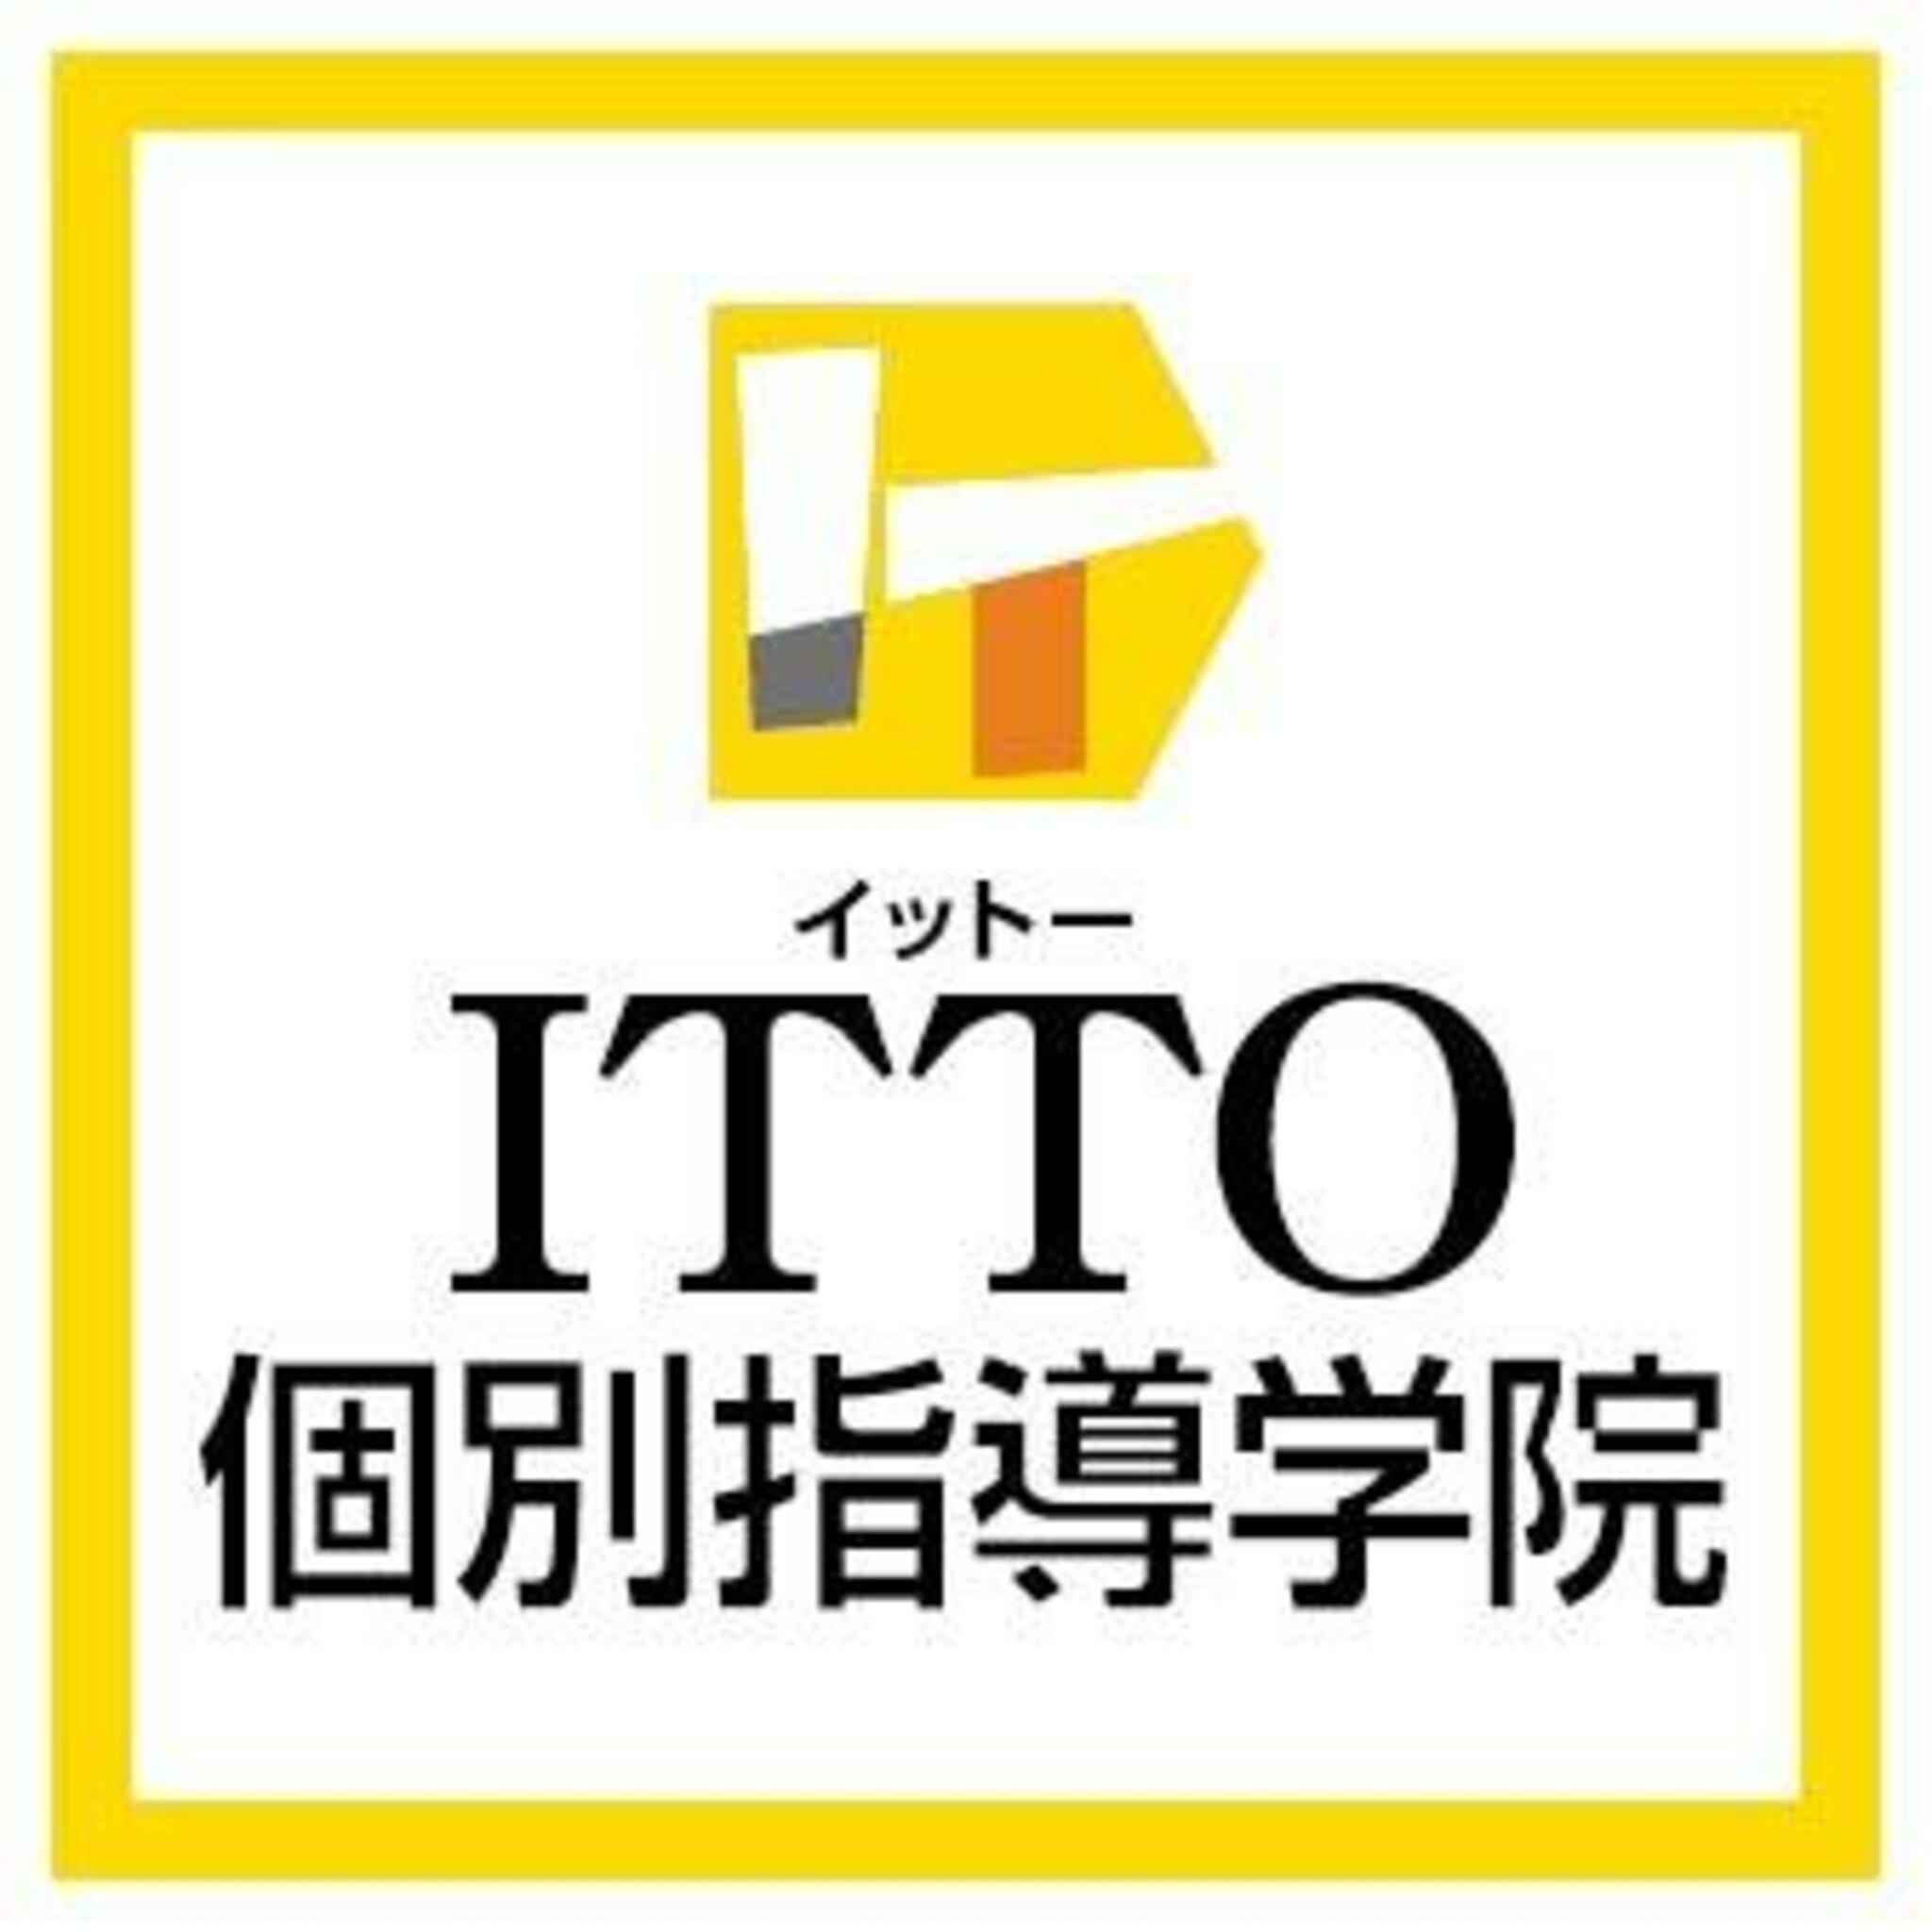 ITTO個別指導学院 上福岡桜通り校の代表写真7